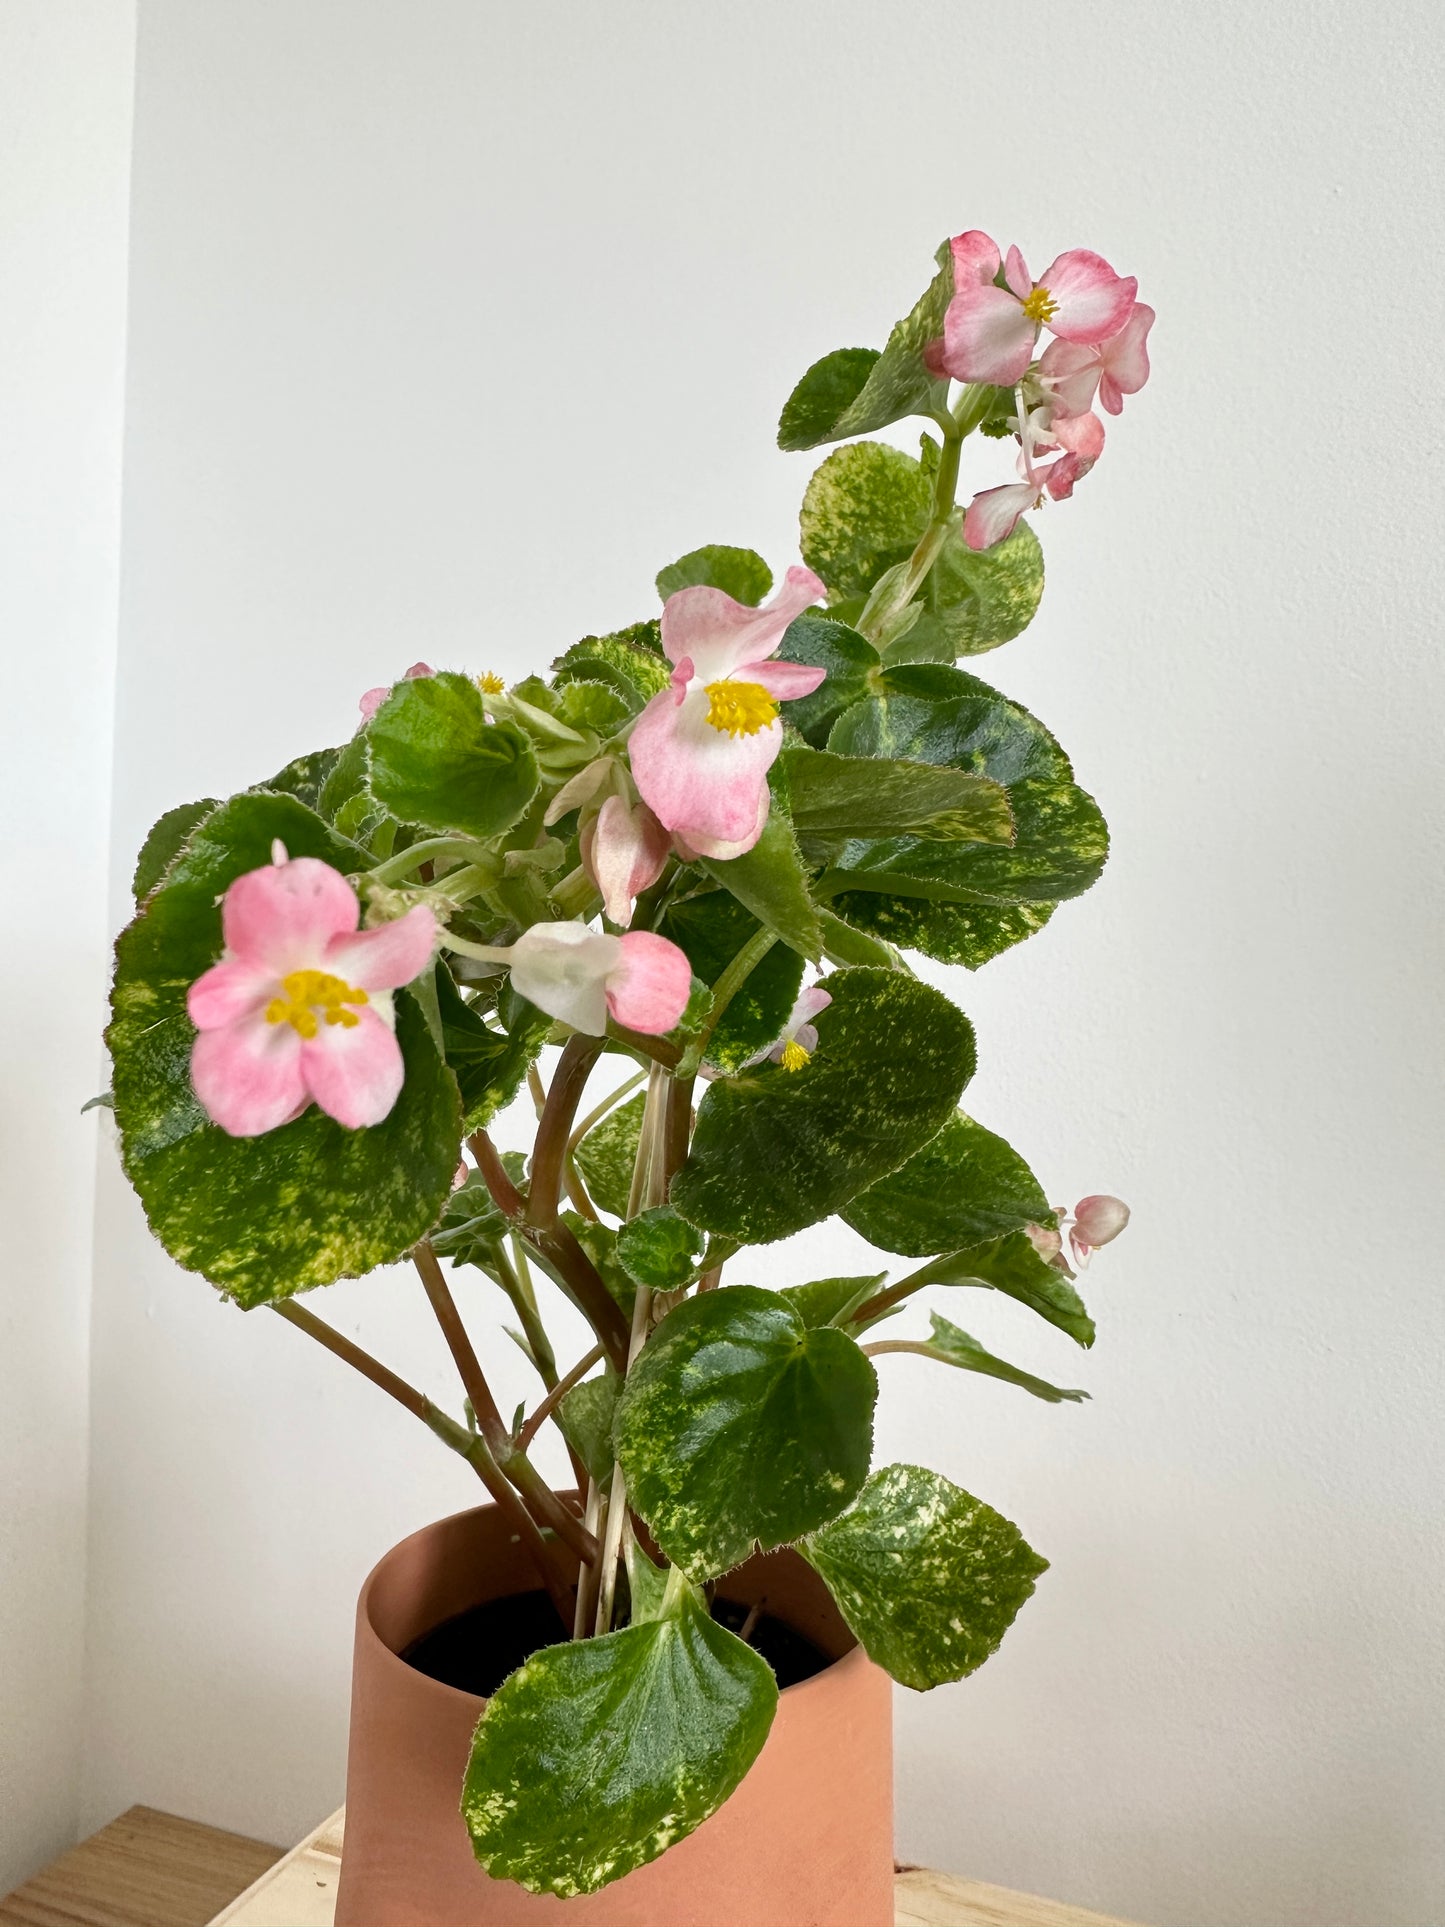 5" Terracotta Boobie Planter + Flowering Begonia